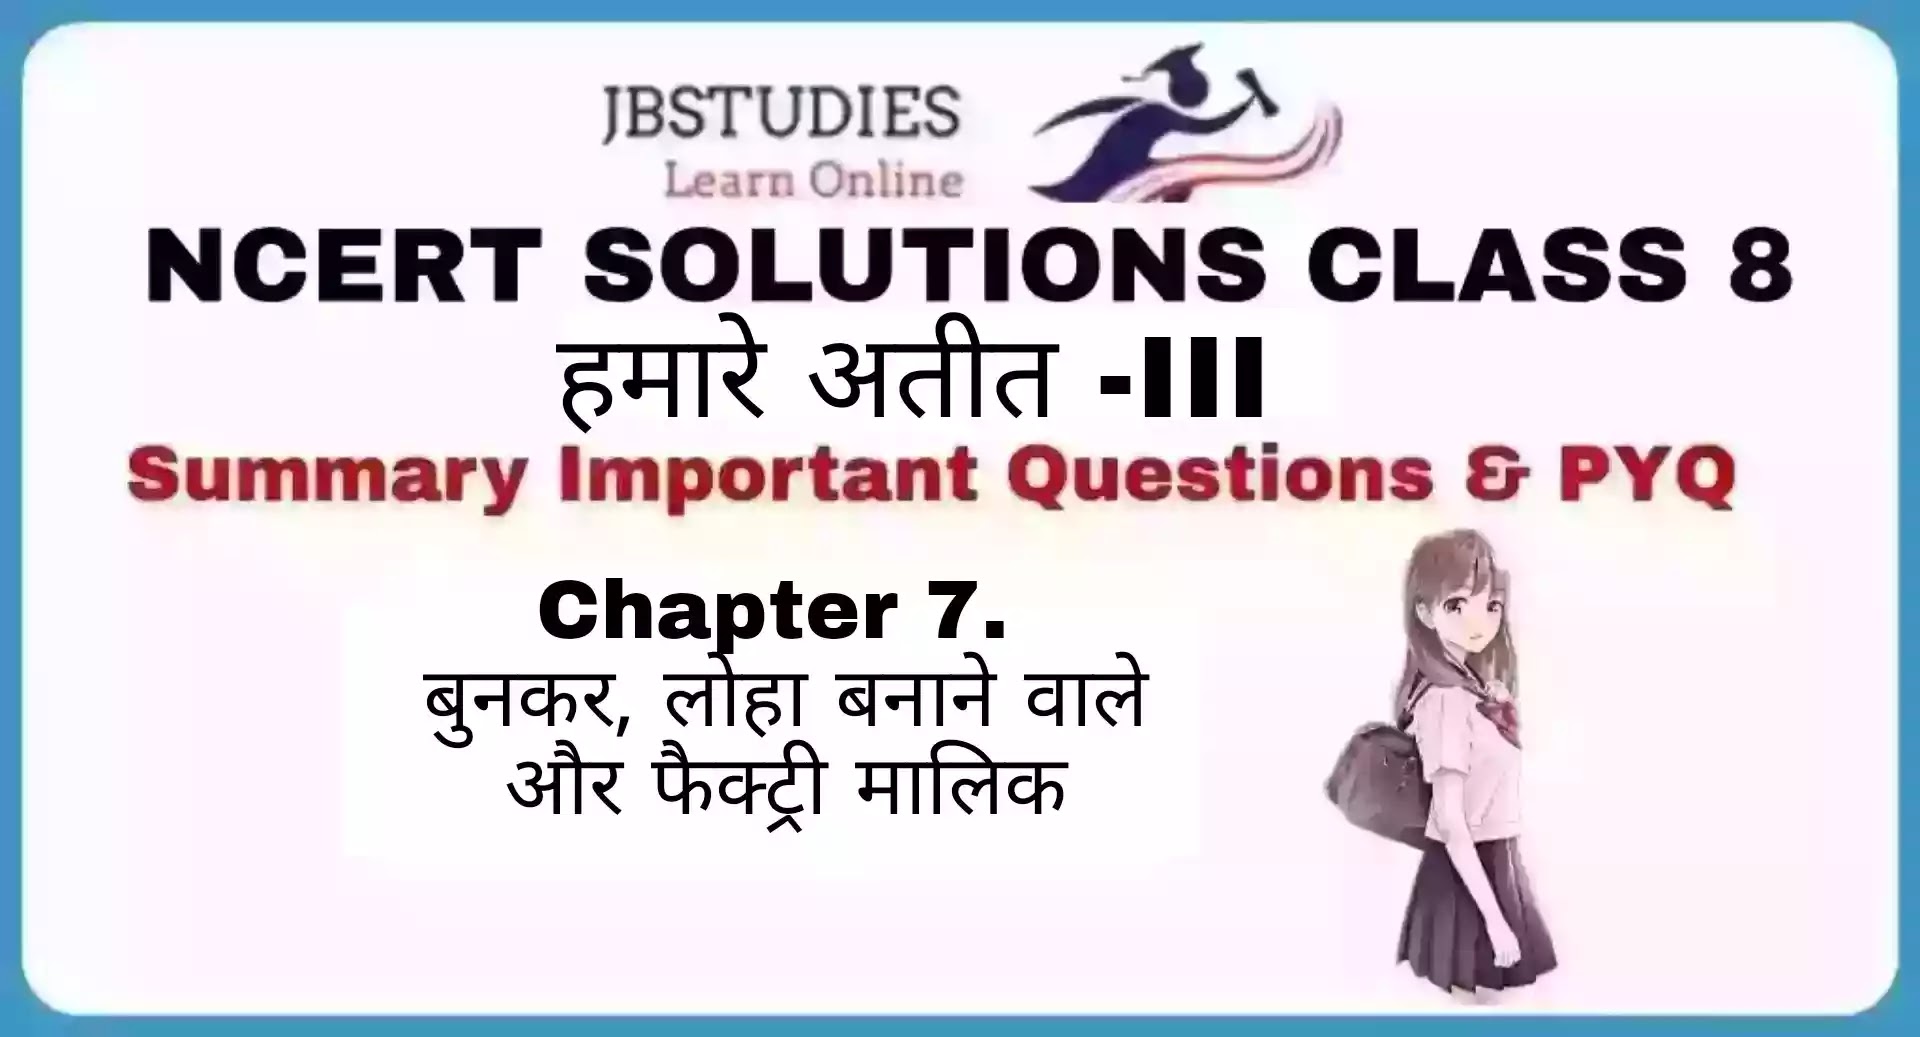 Solutions Class 8 हमारे अतीत -III Chapter- 7 (बुनकर, लोहा बनाने वाले और फैक्ट्री मालिक )